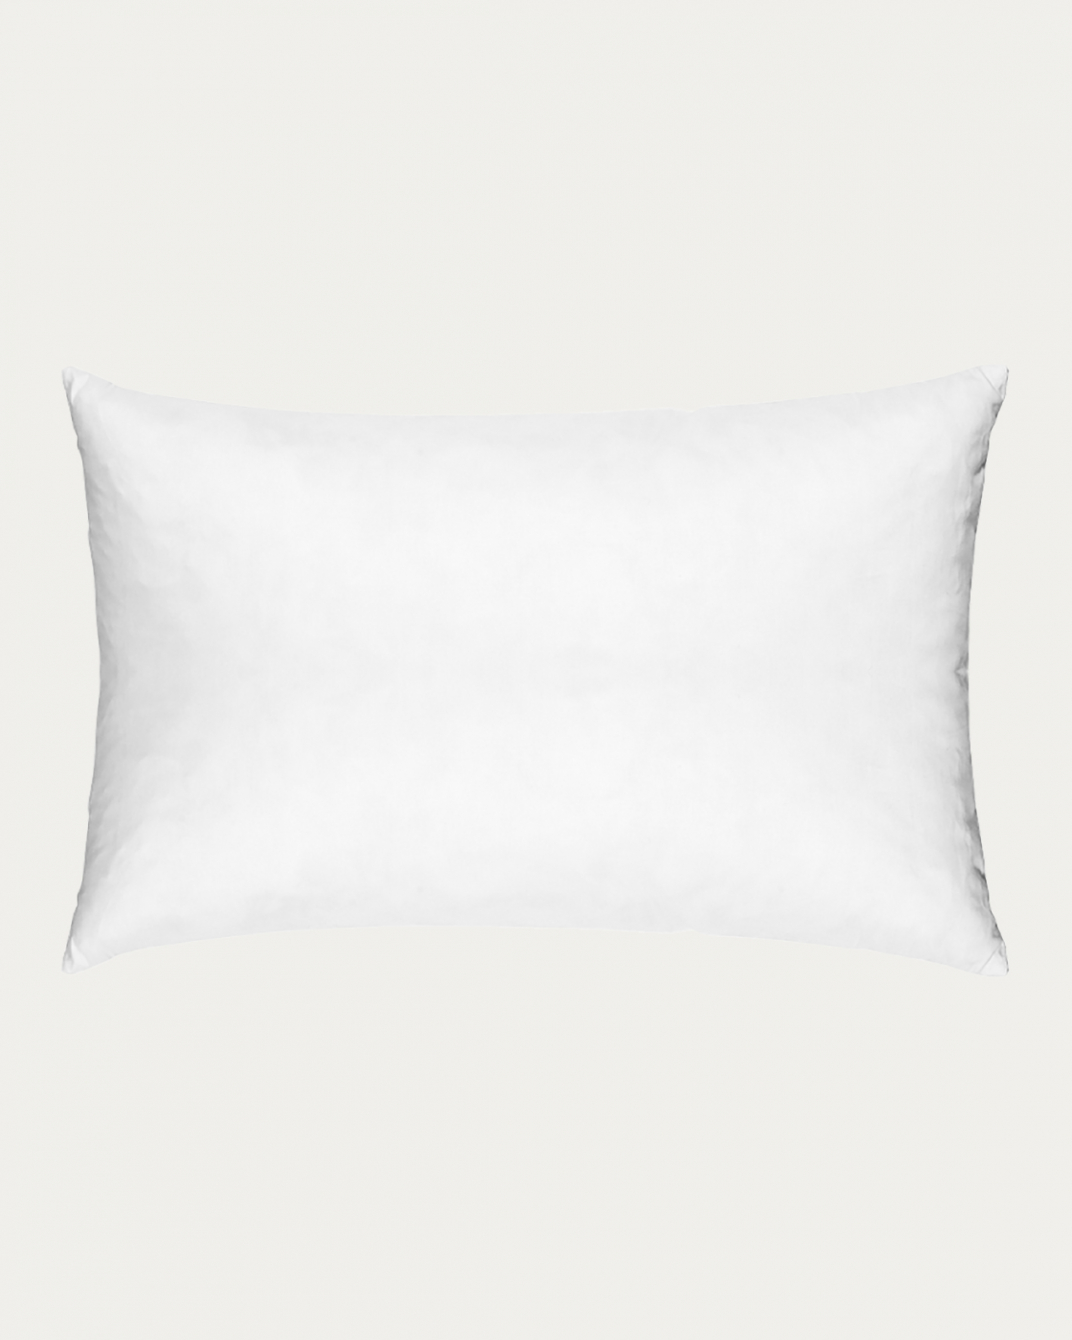 SYNTHETIC Cushion Insert 40x60 cm